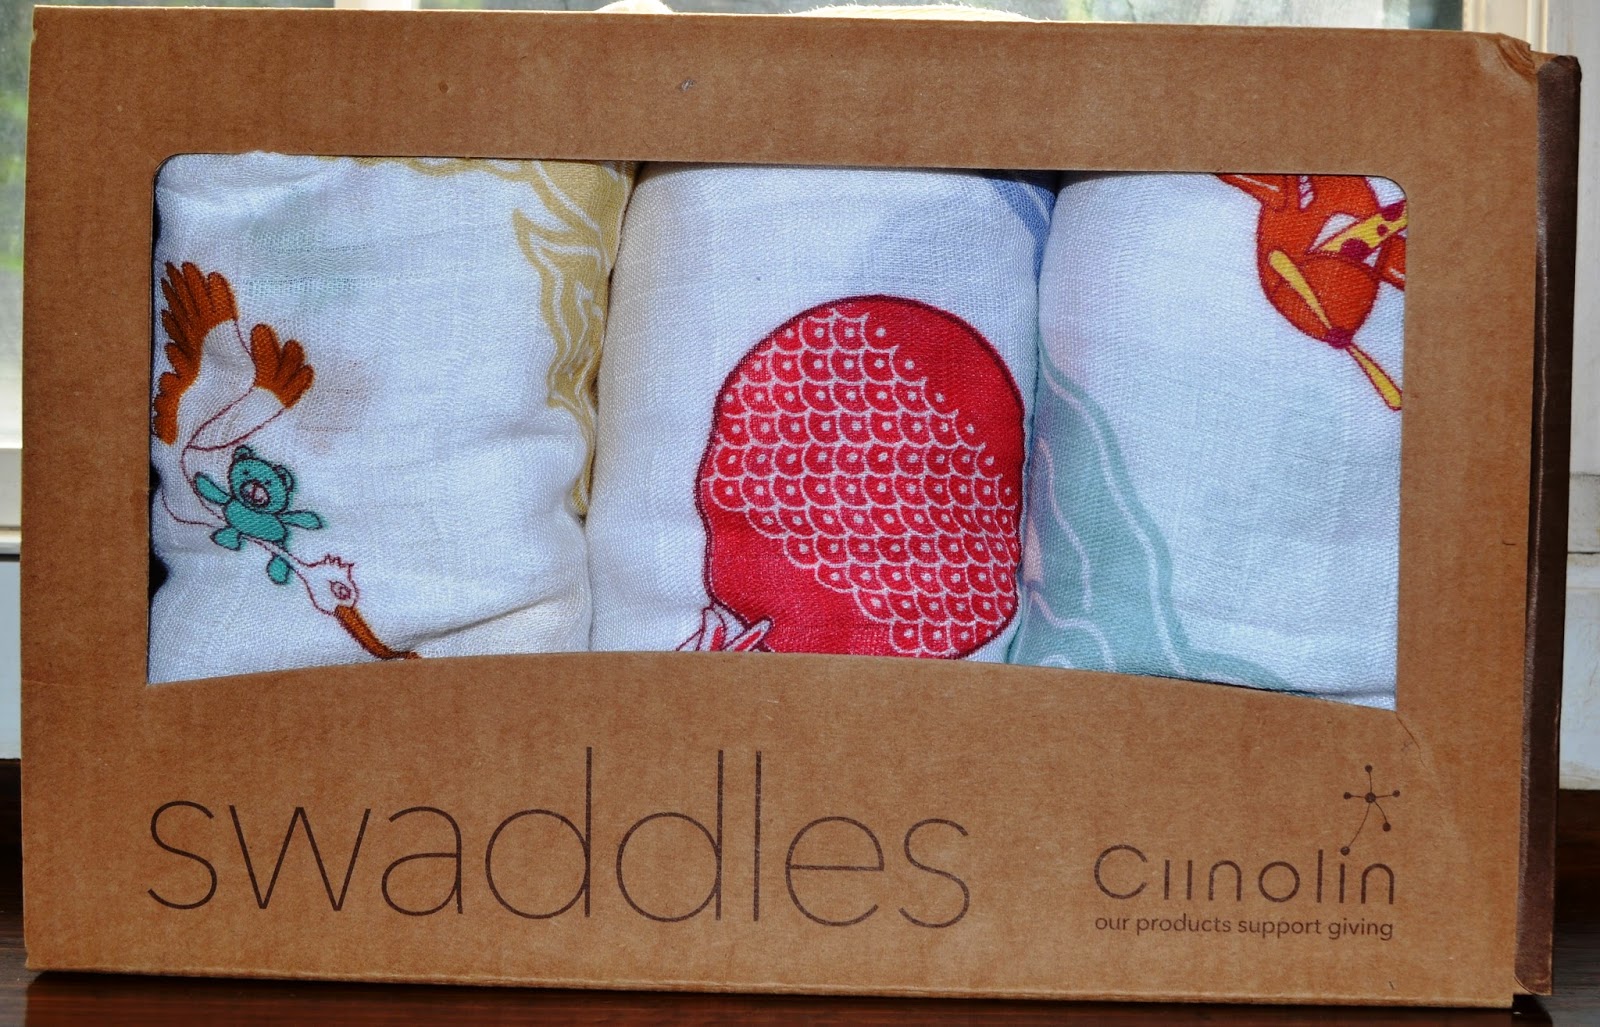 Ciinolin Swaddle Blankets